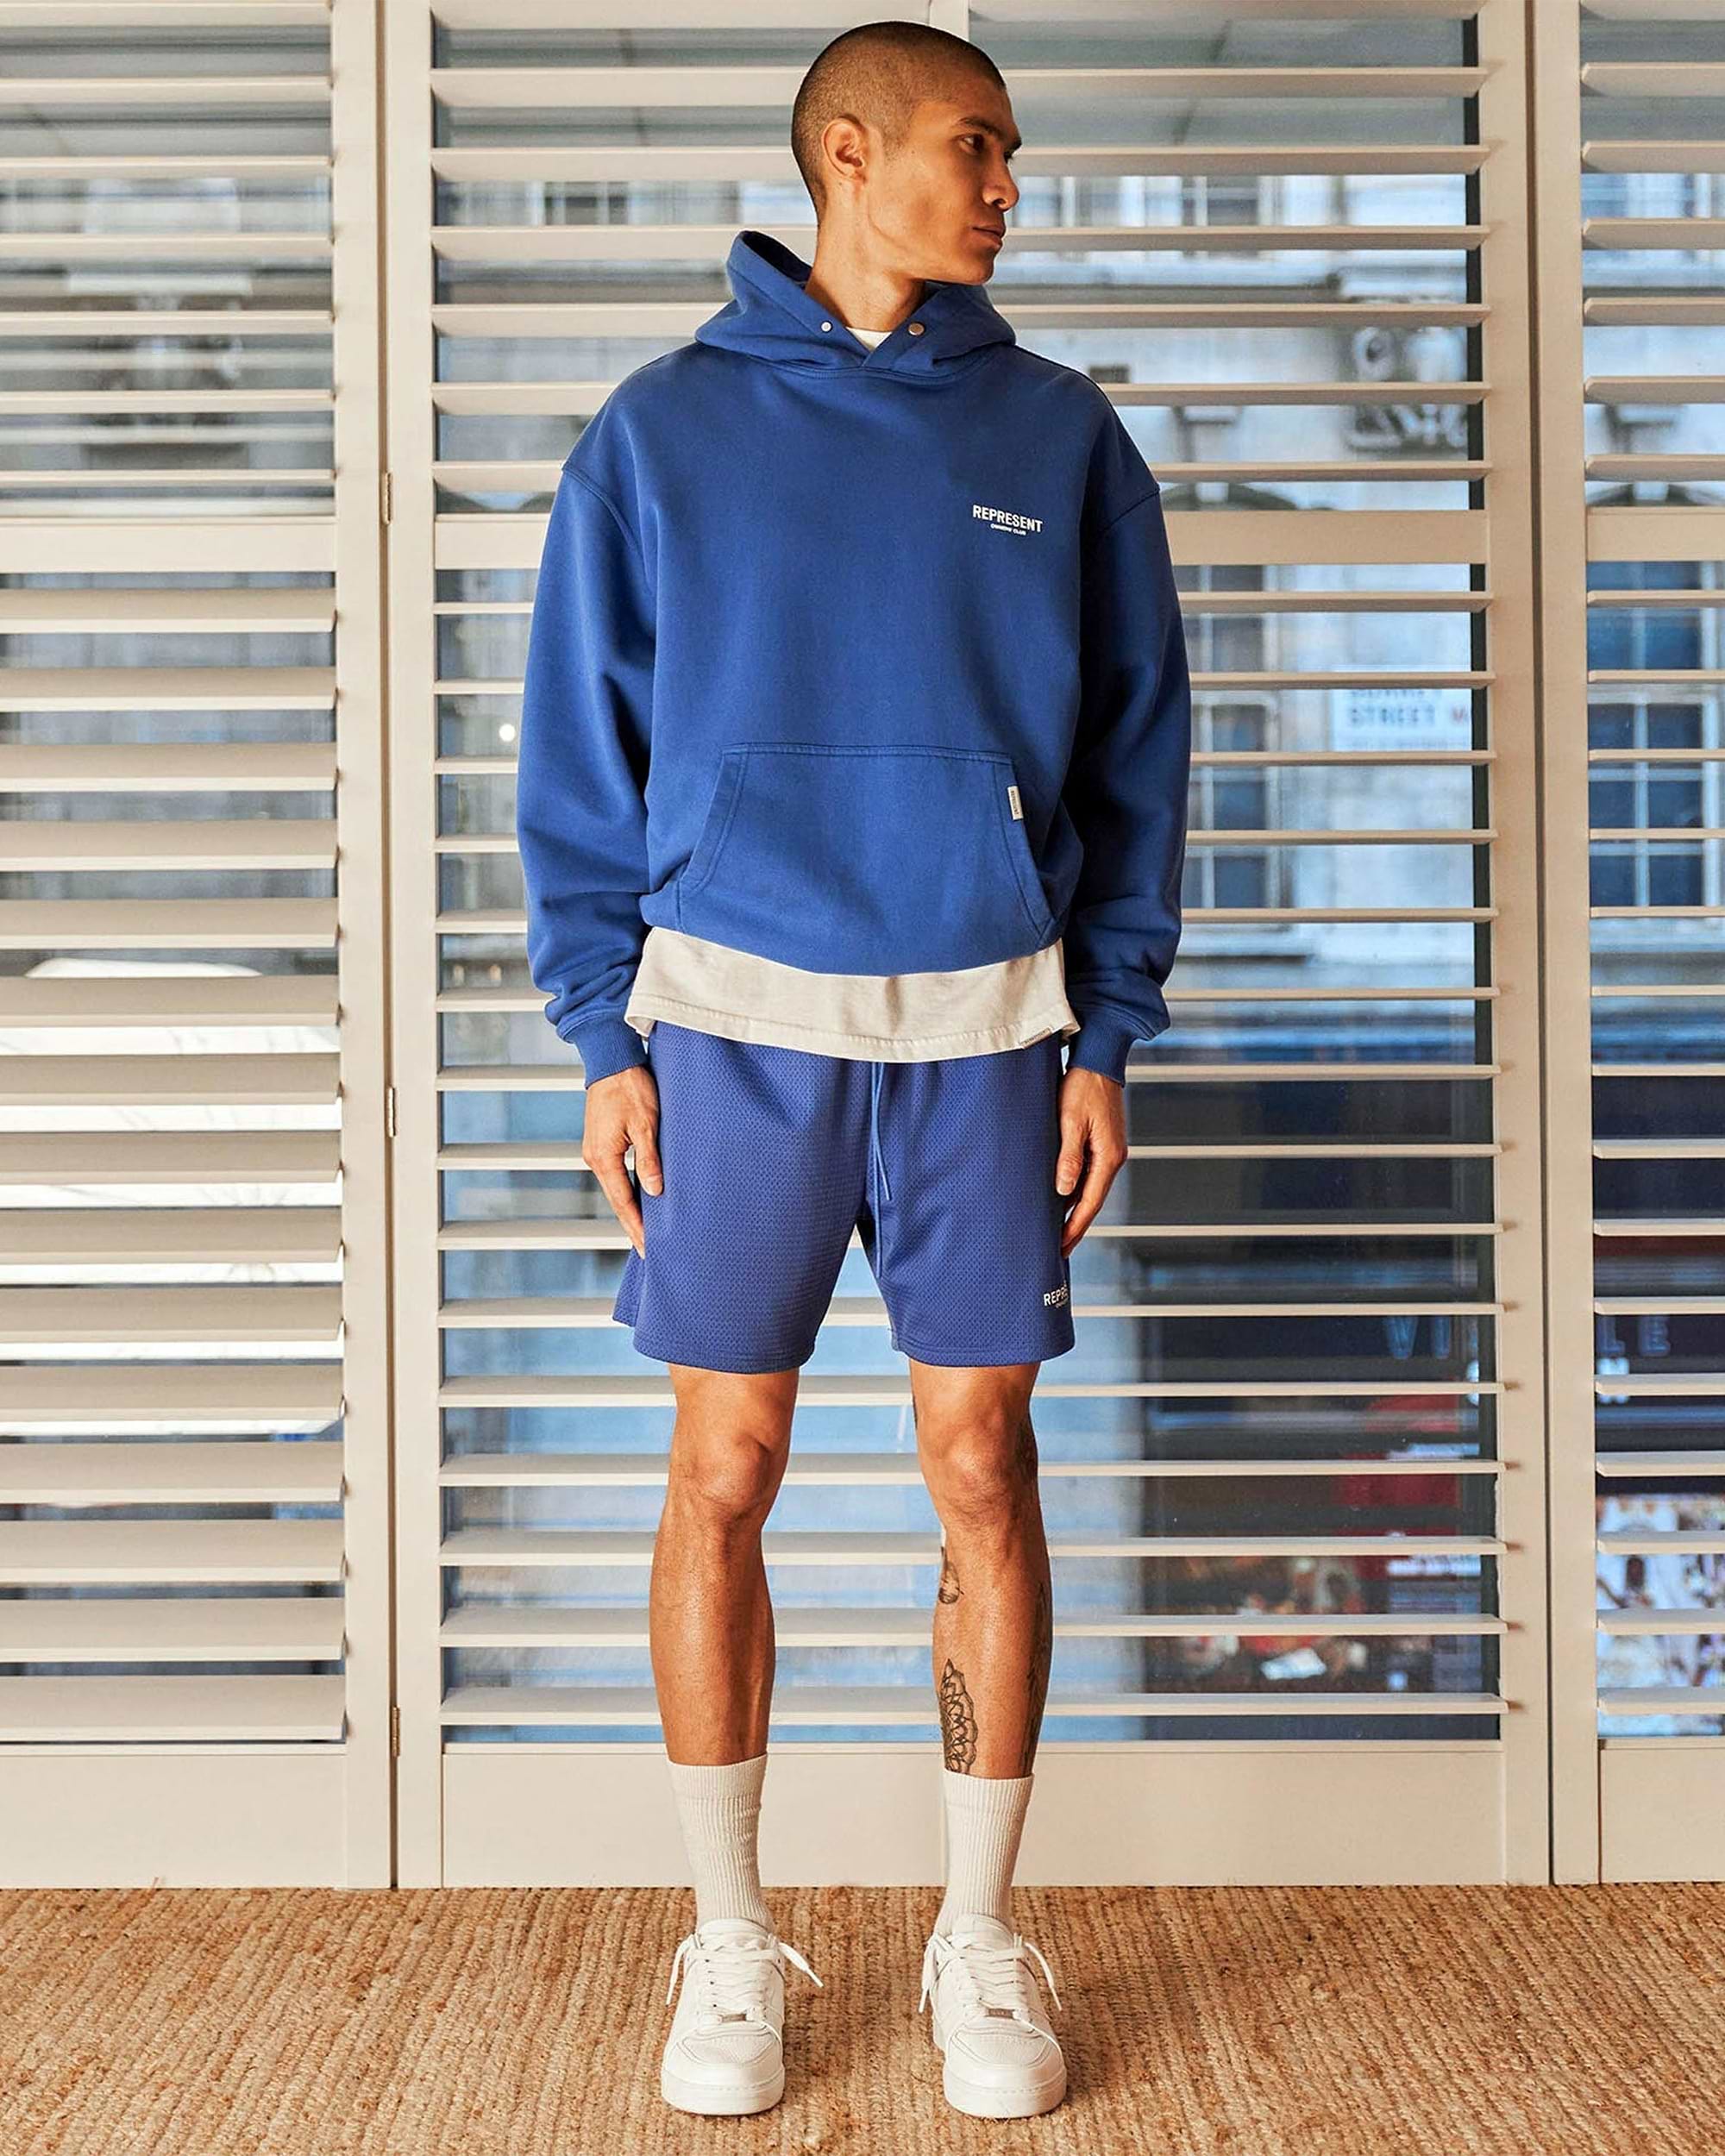 Mesh Shorts For Men  Hong Kong Fashion Mass Branded